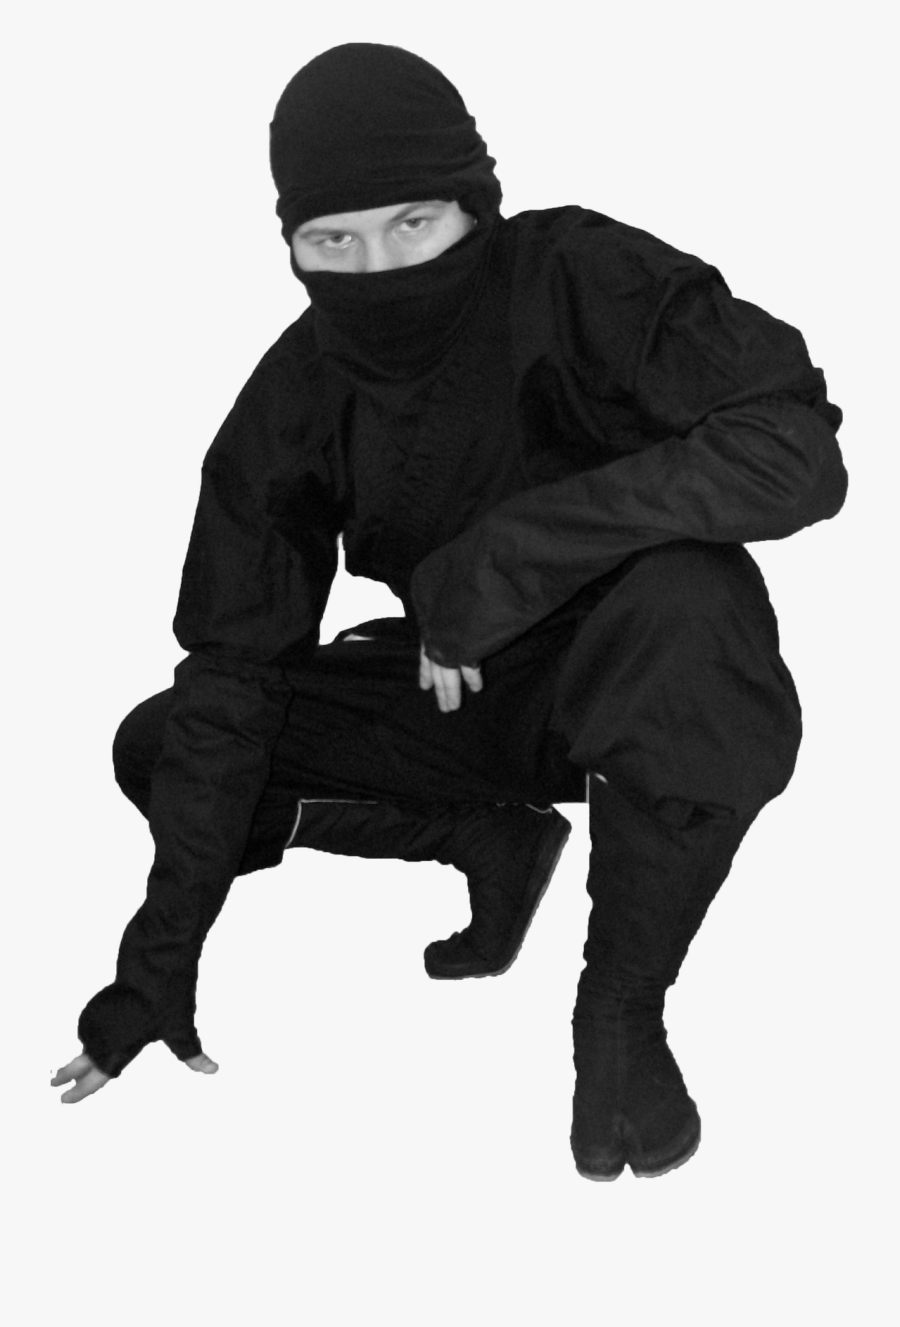 Ninja Png Image - Halloween Costumes Ninja, Transparent Clipart